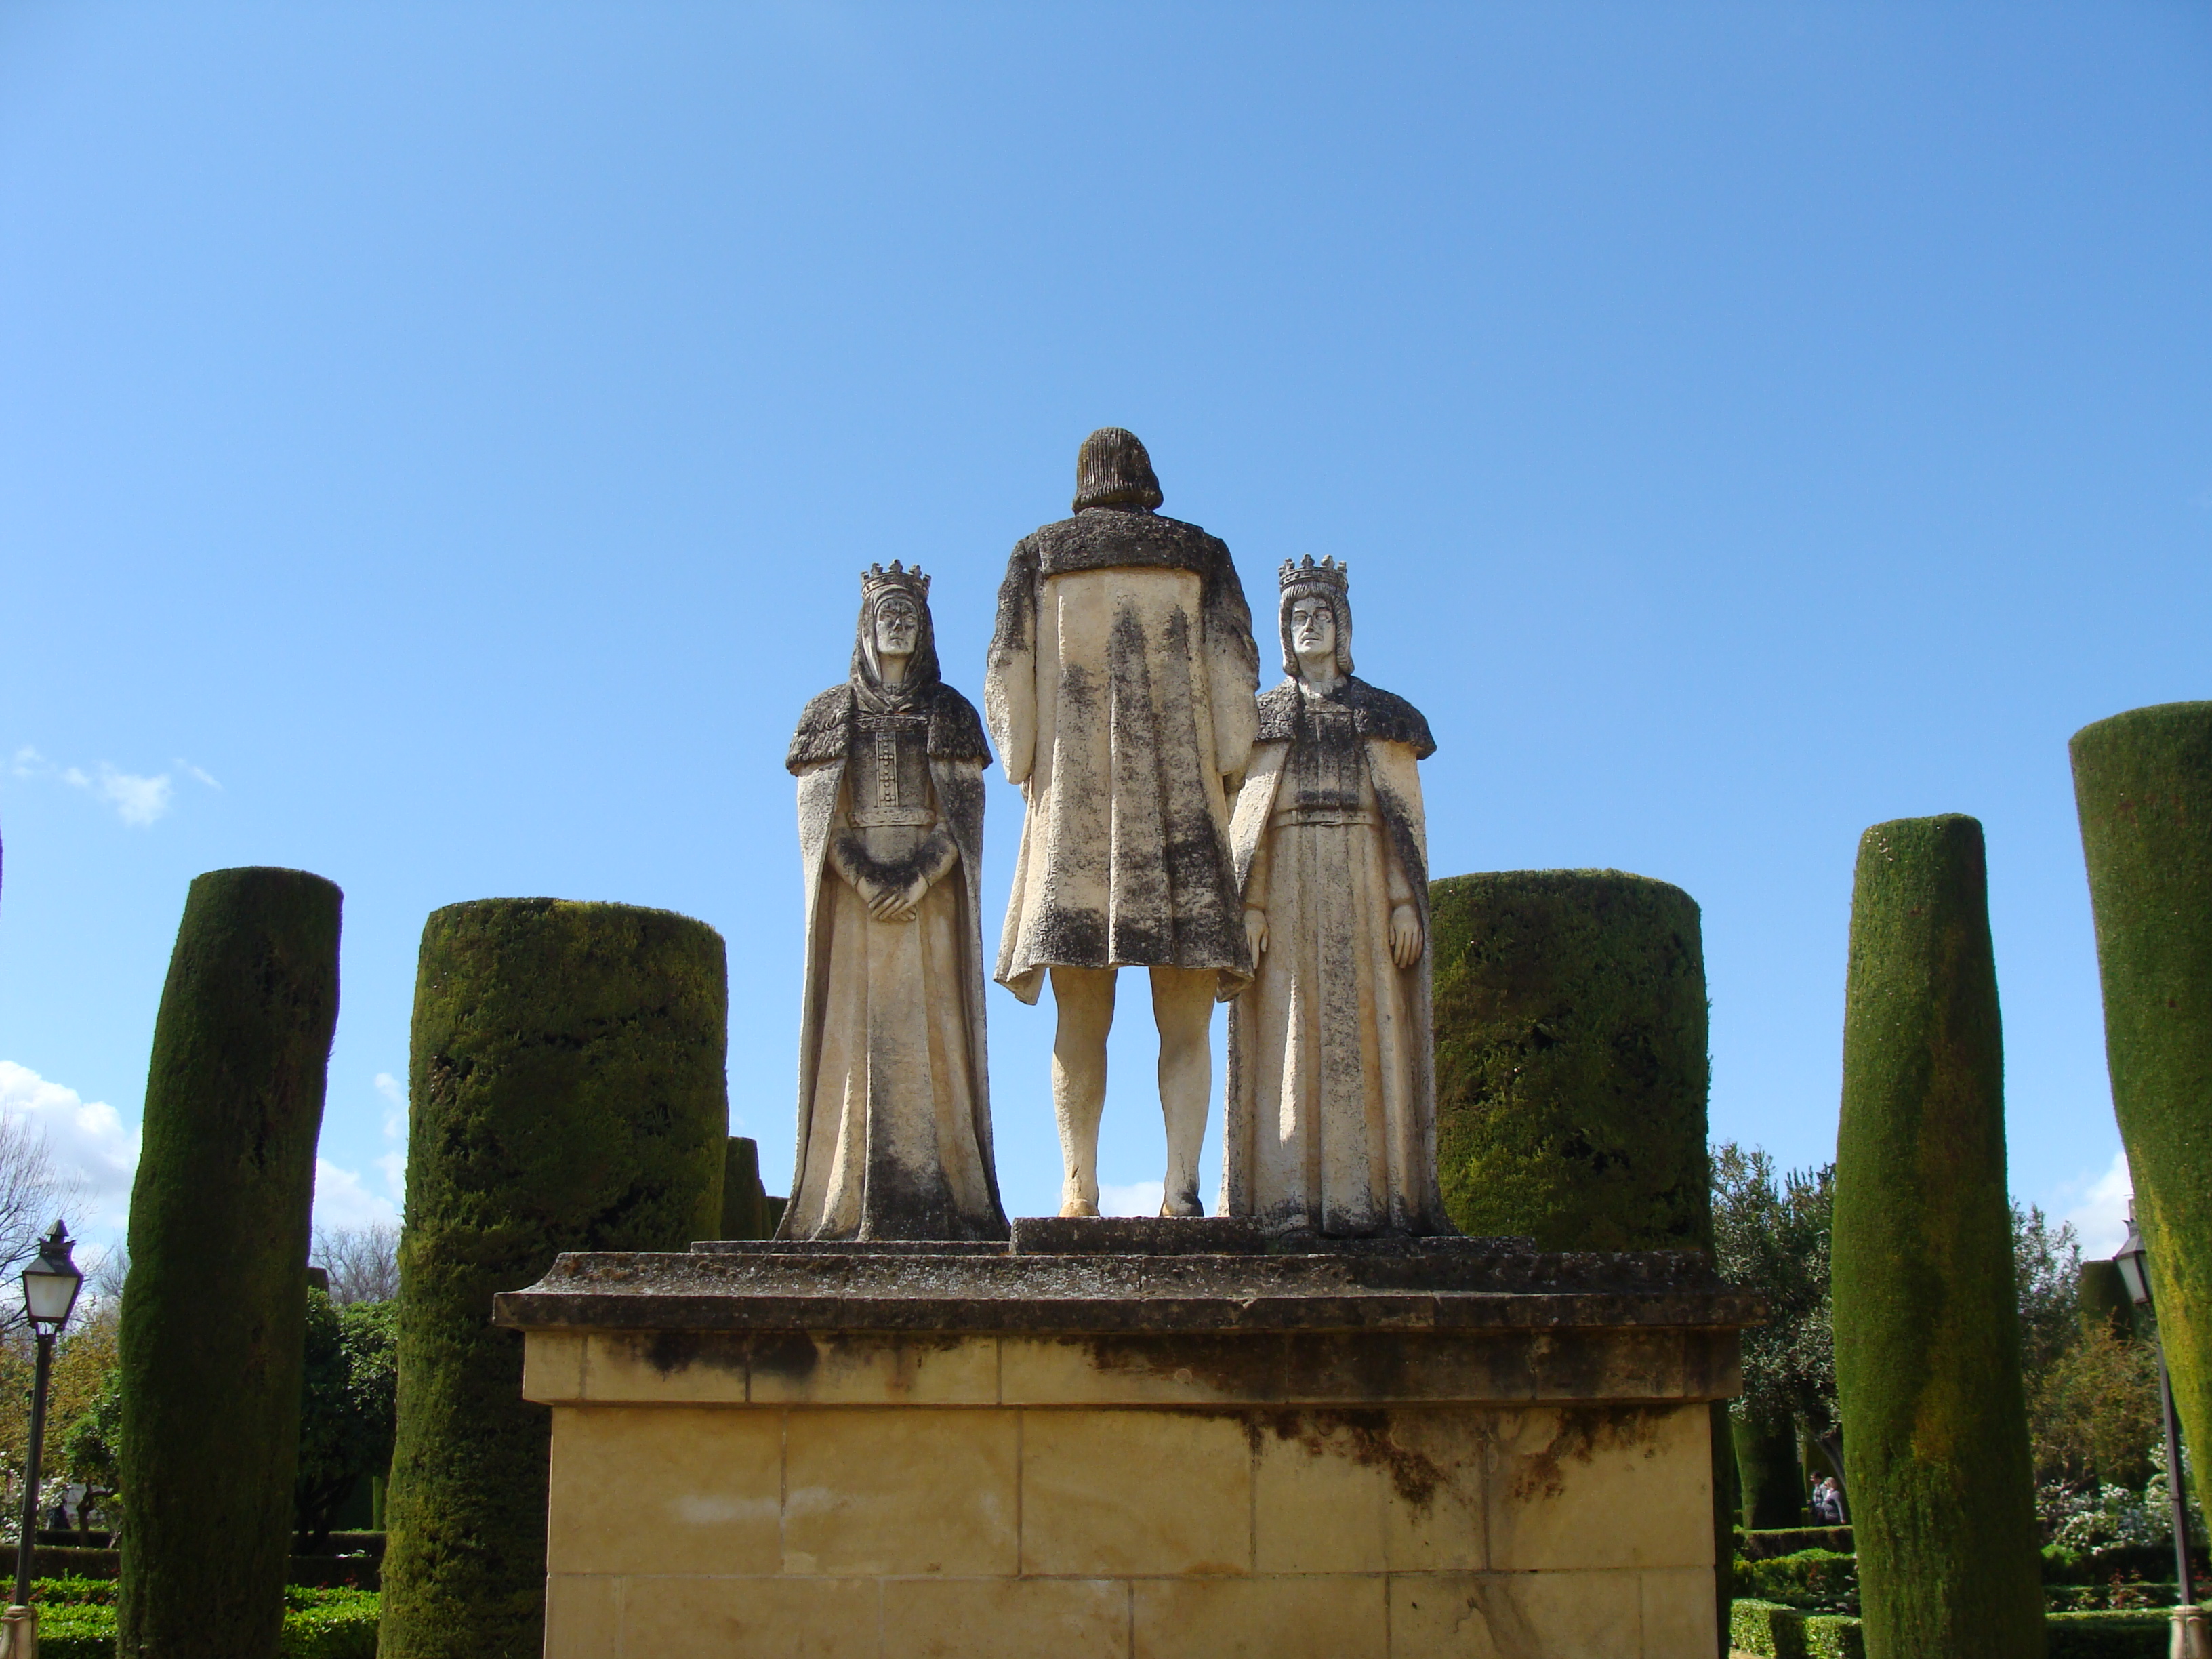 Christopher Columbus statue, Sevilla, Spain